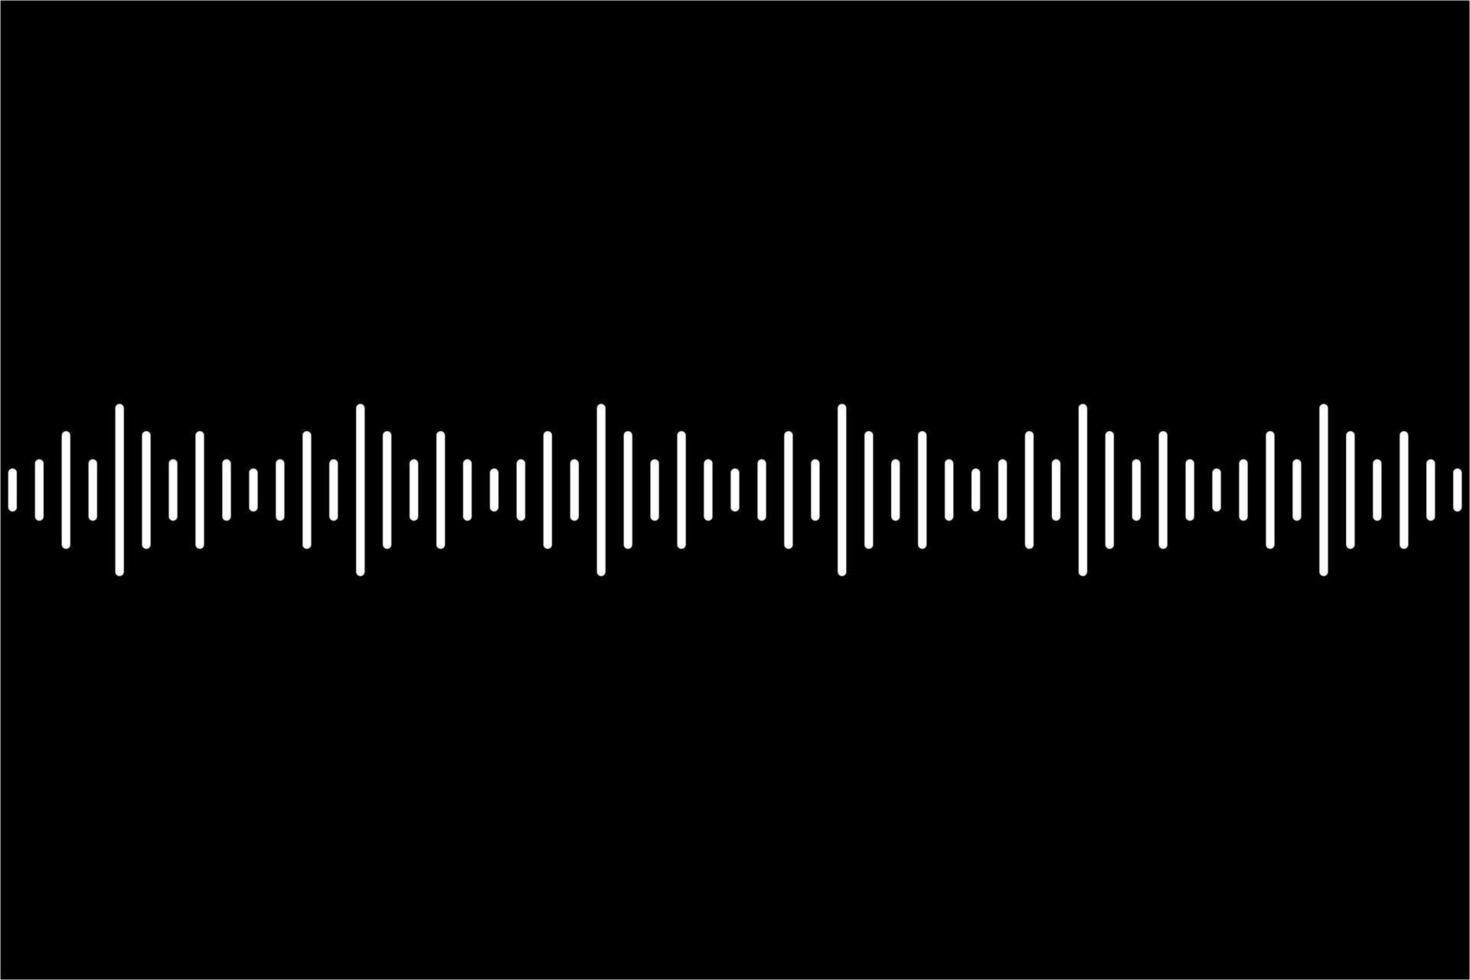 Sound Wave Music Volume Icon Symbol for Logo, Apps, Pictogram, Website or Graphic Design Element. Vector Illustration